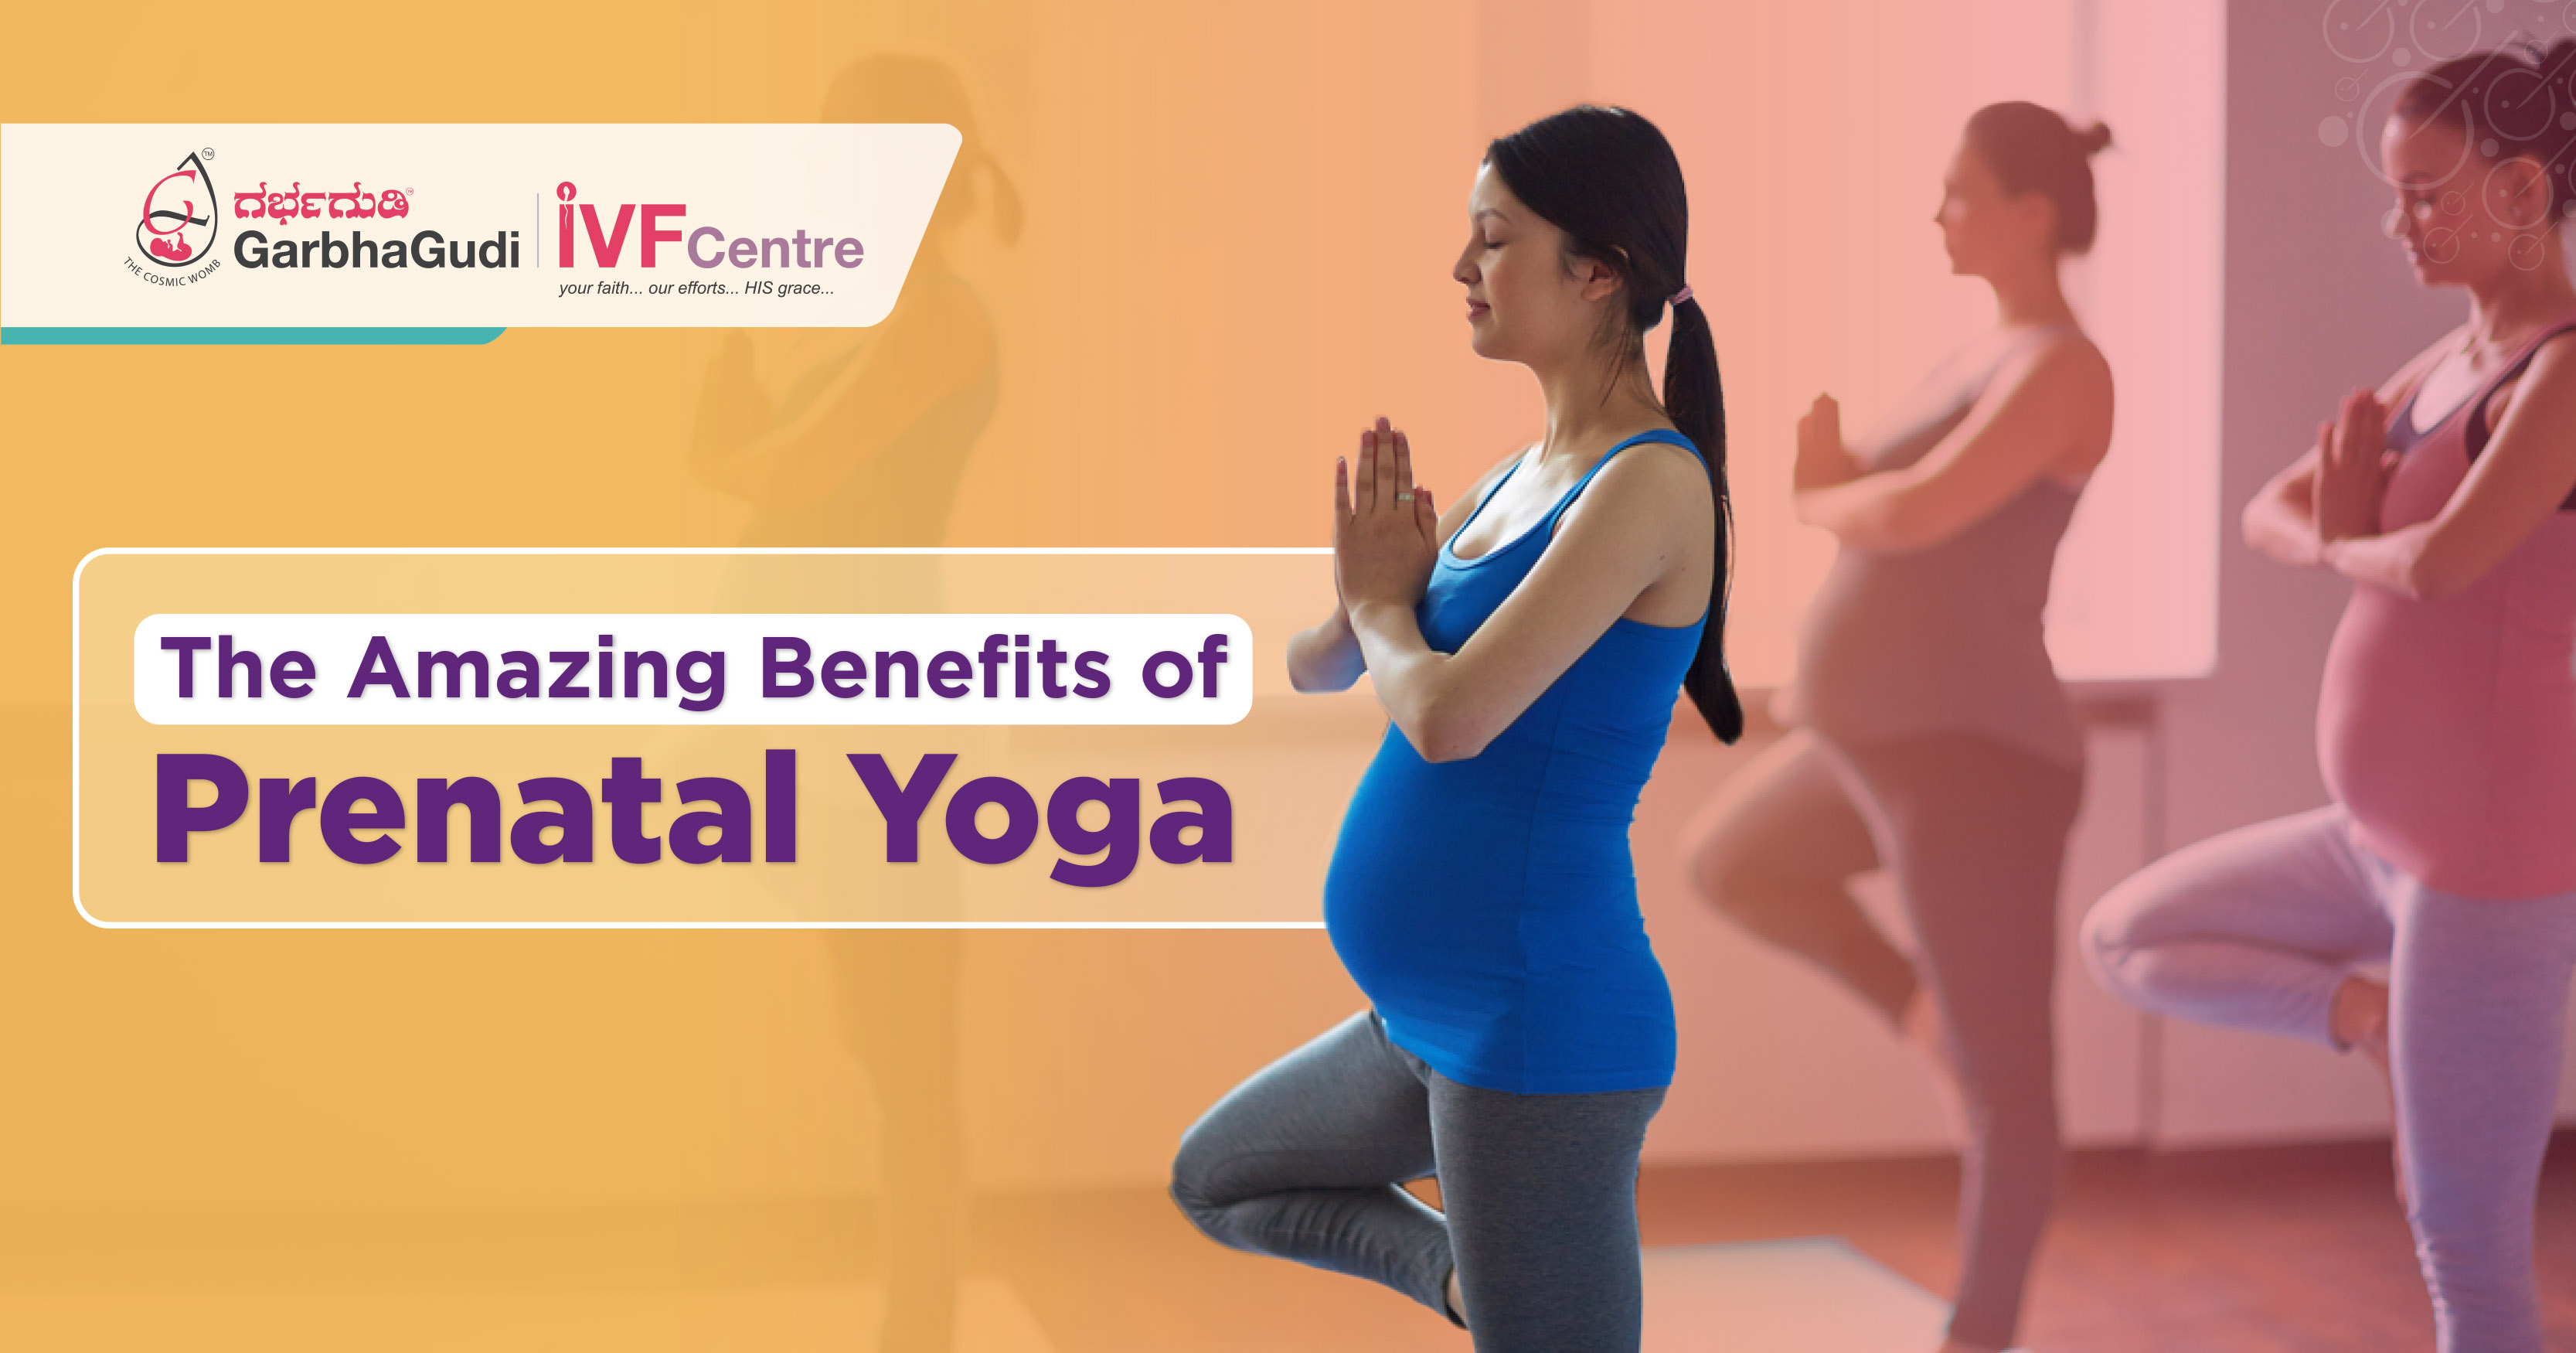 Pregnancy Yoga benefits!